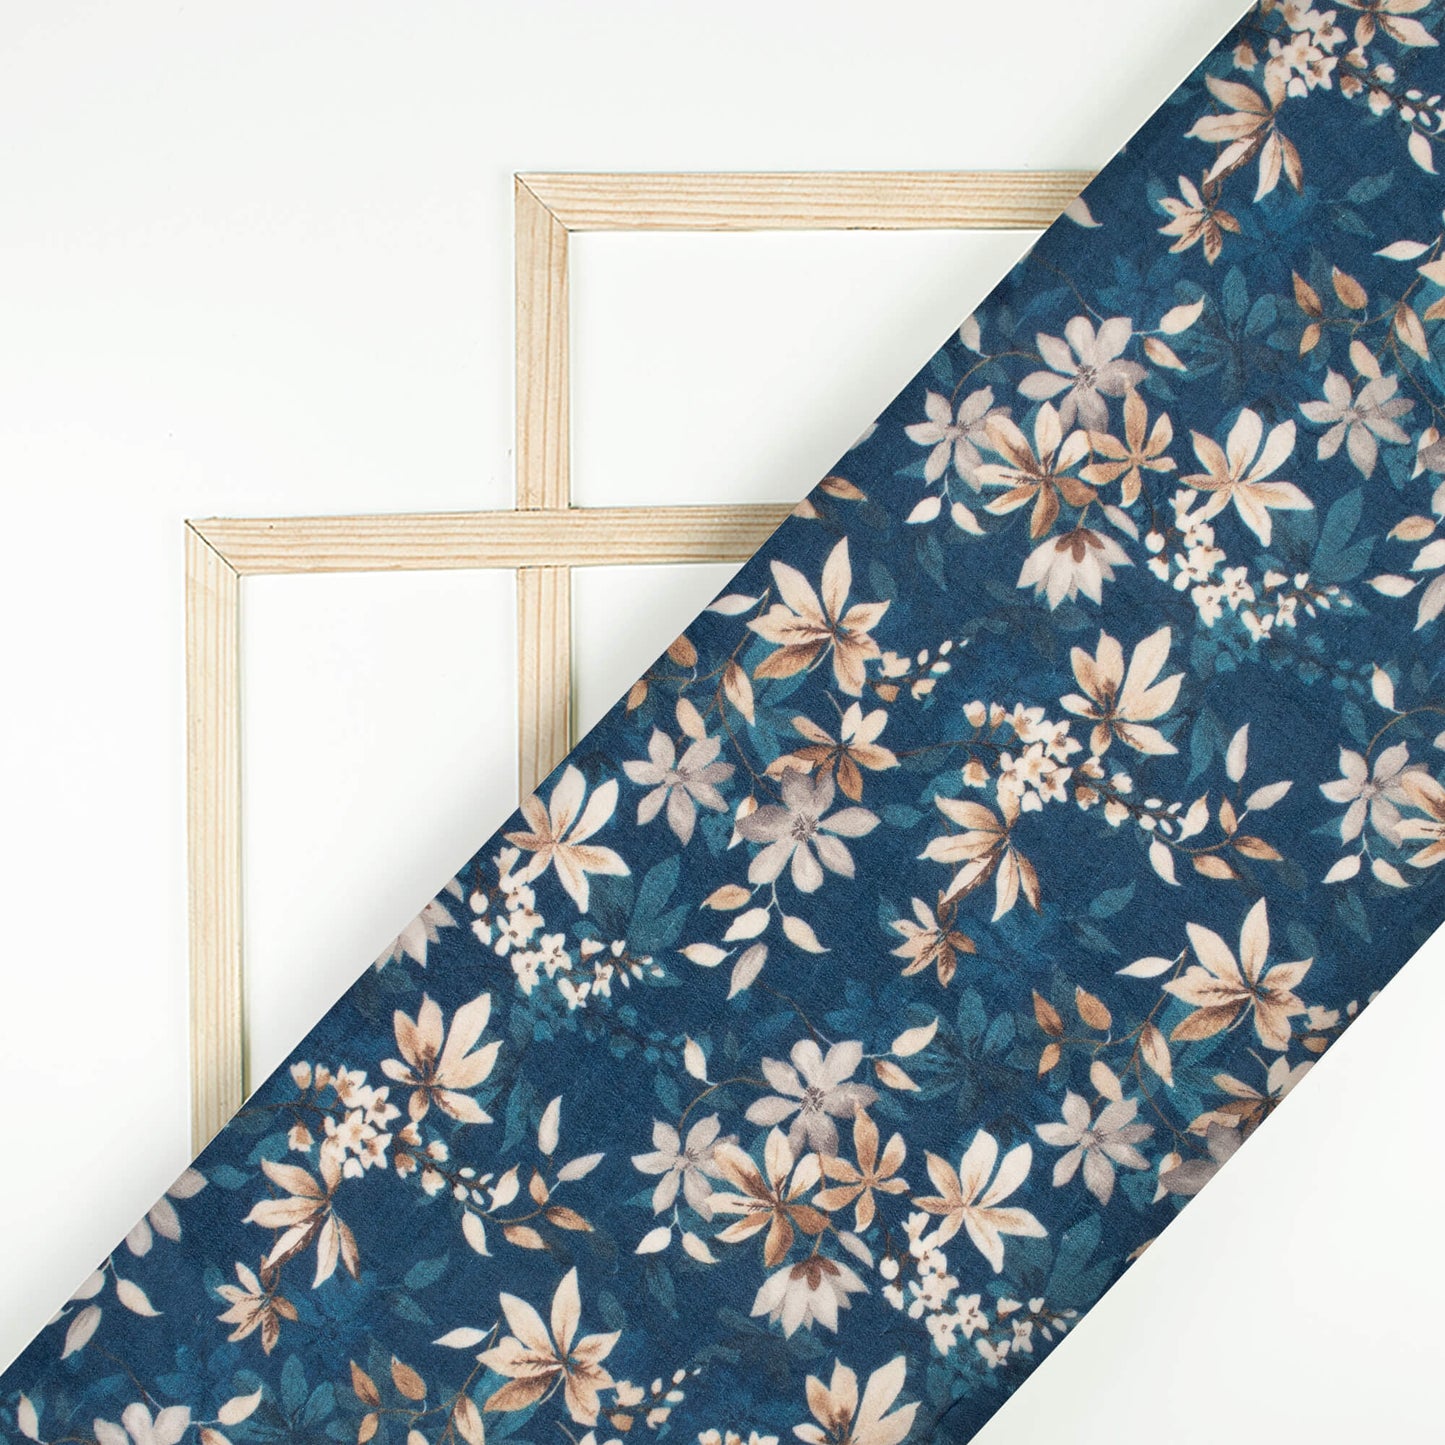 Aegean Blue And Beige Floral Digital Print Bemberg Raw Silk Fabric